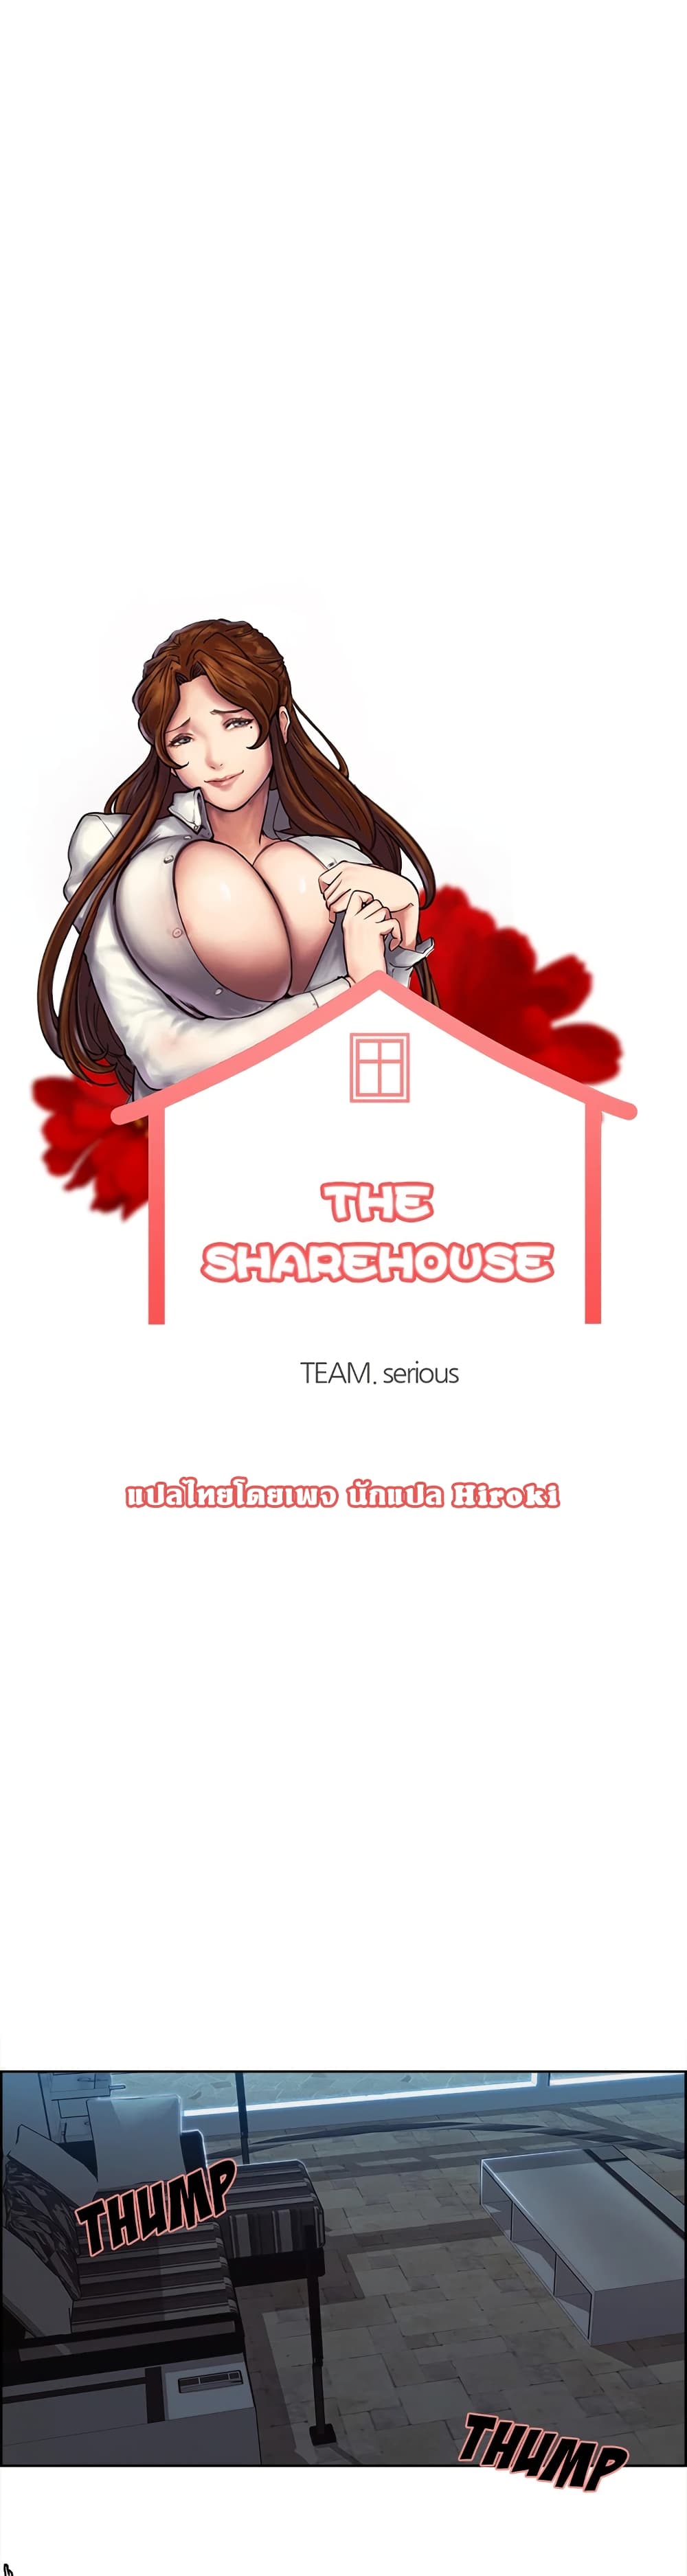 The Sharehouse 36-36